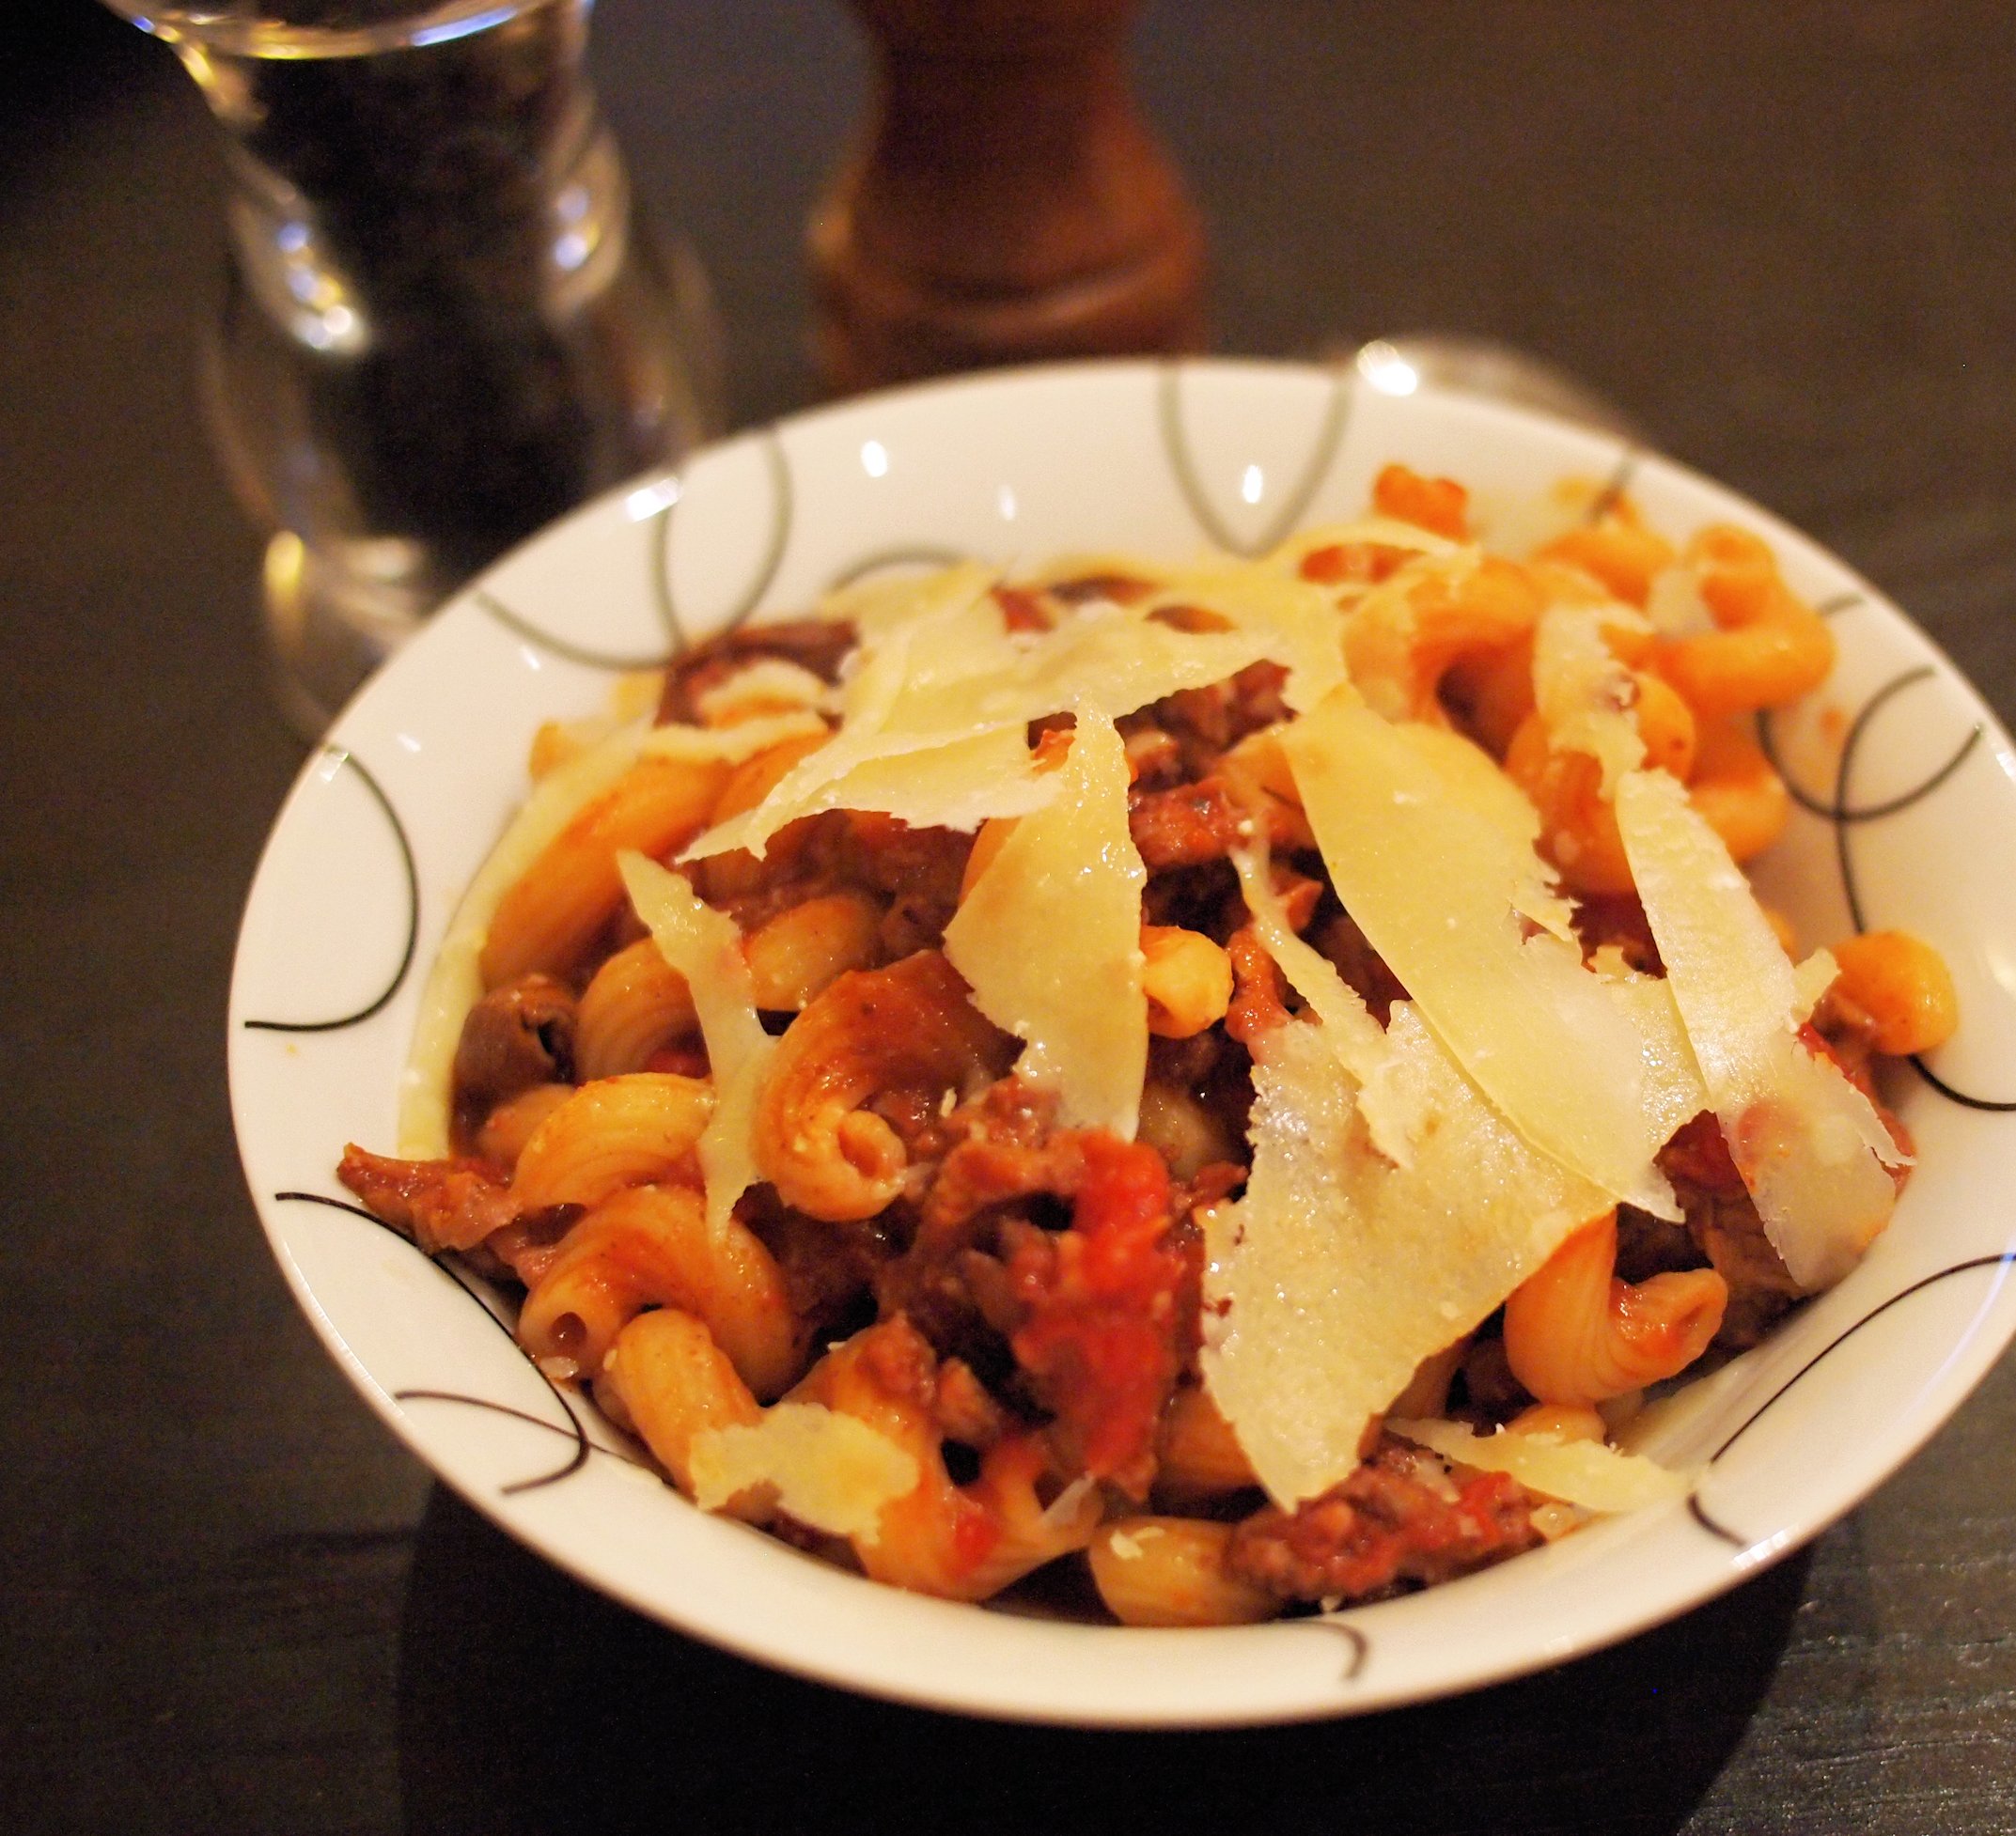 [Hohe Qualität, niedriger Preis] Easy Family Recipe: Italian Cheese Bowl (5:2 Padano Diet) with Pasta Grana Sausage